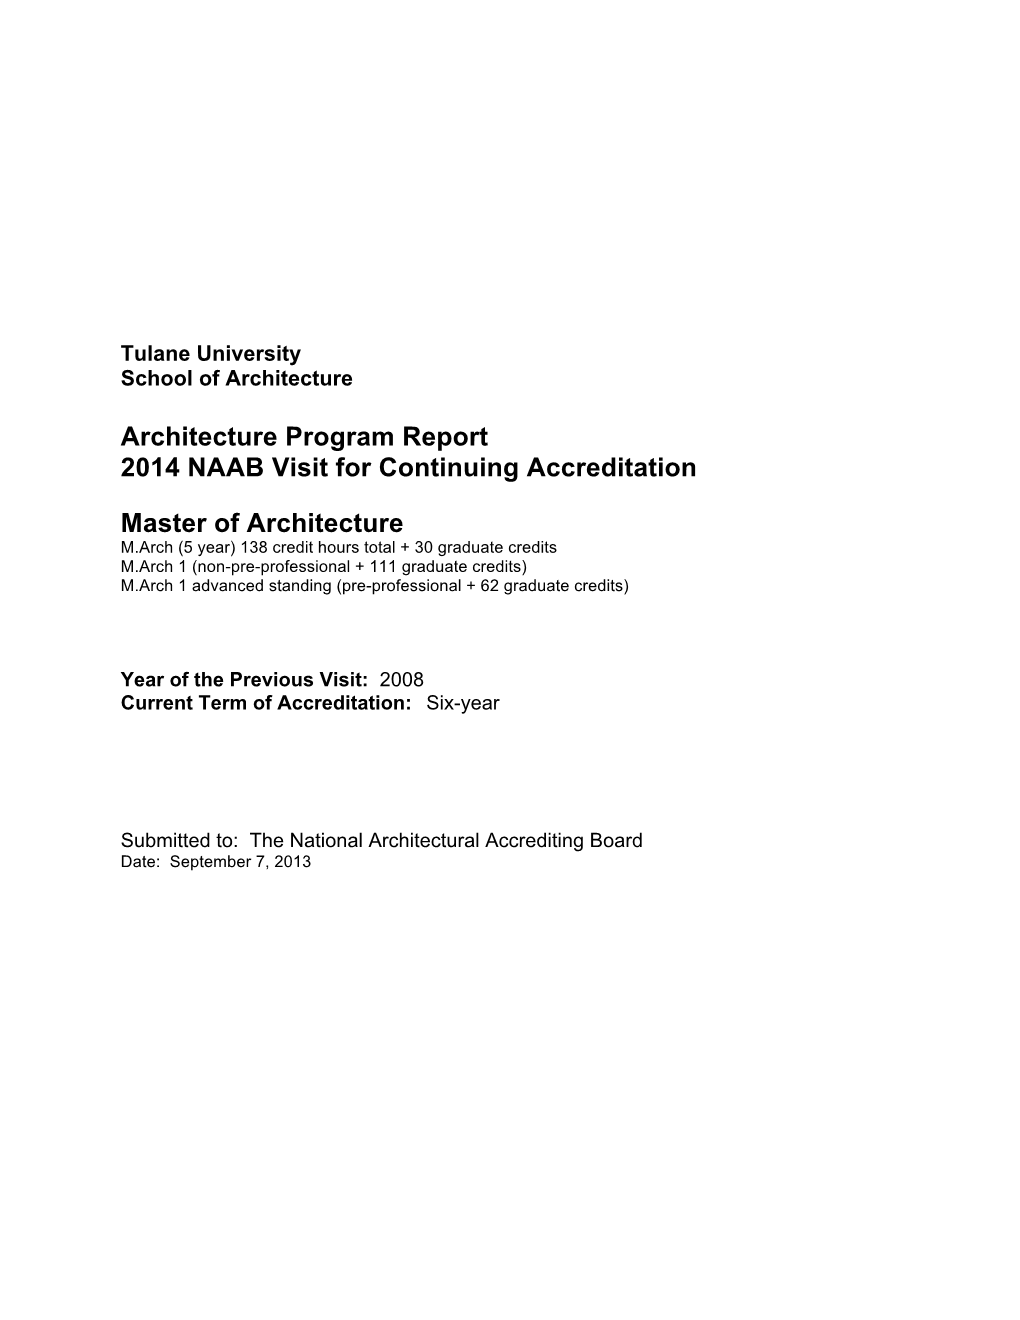 NAAB Architecture Program Report (APR) 2014